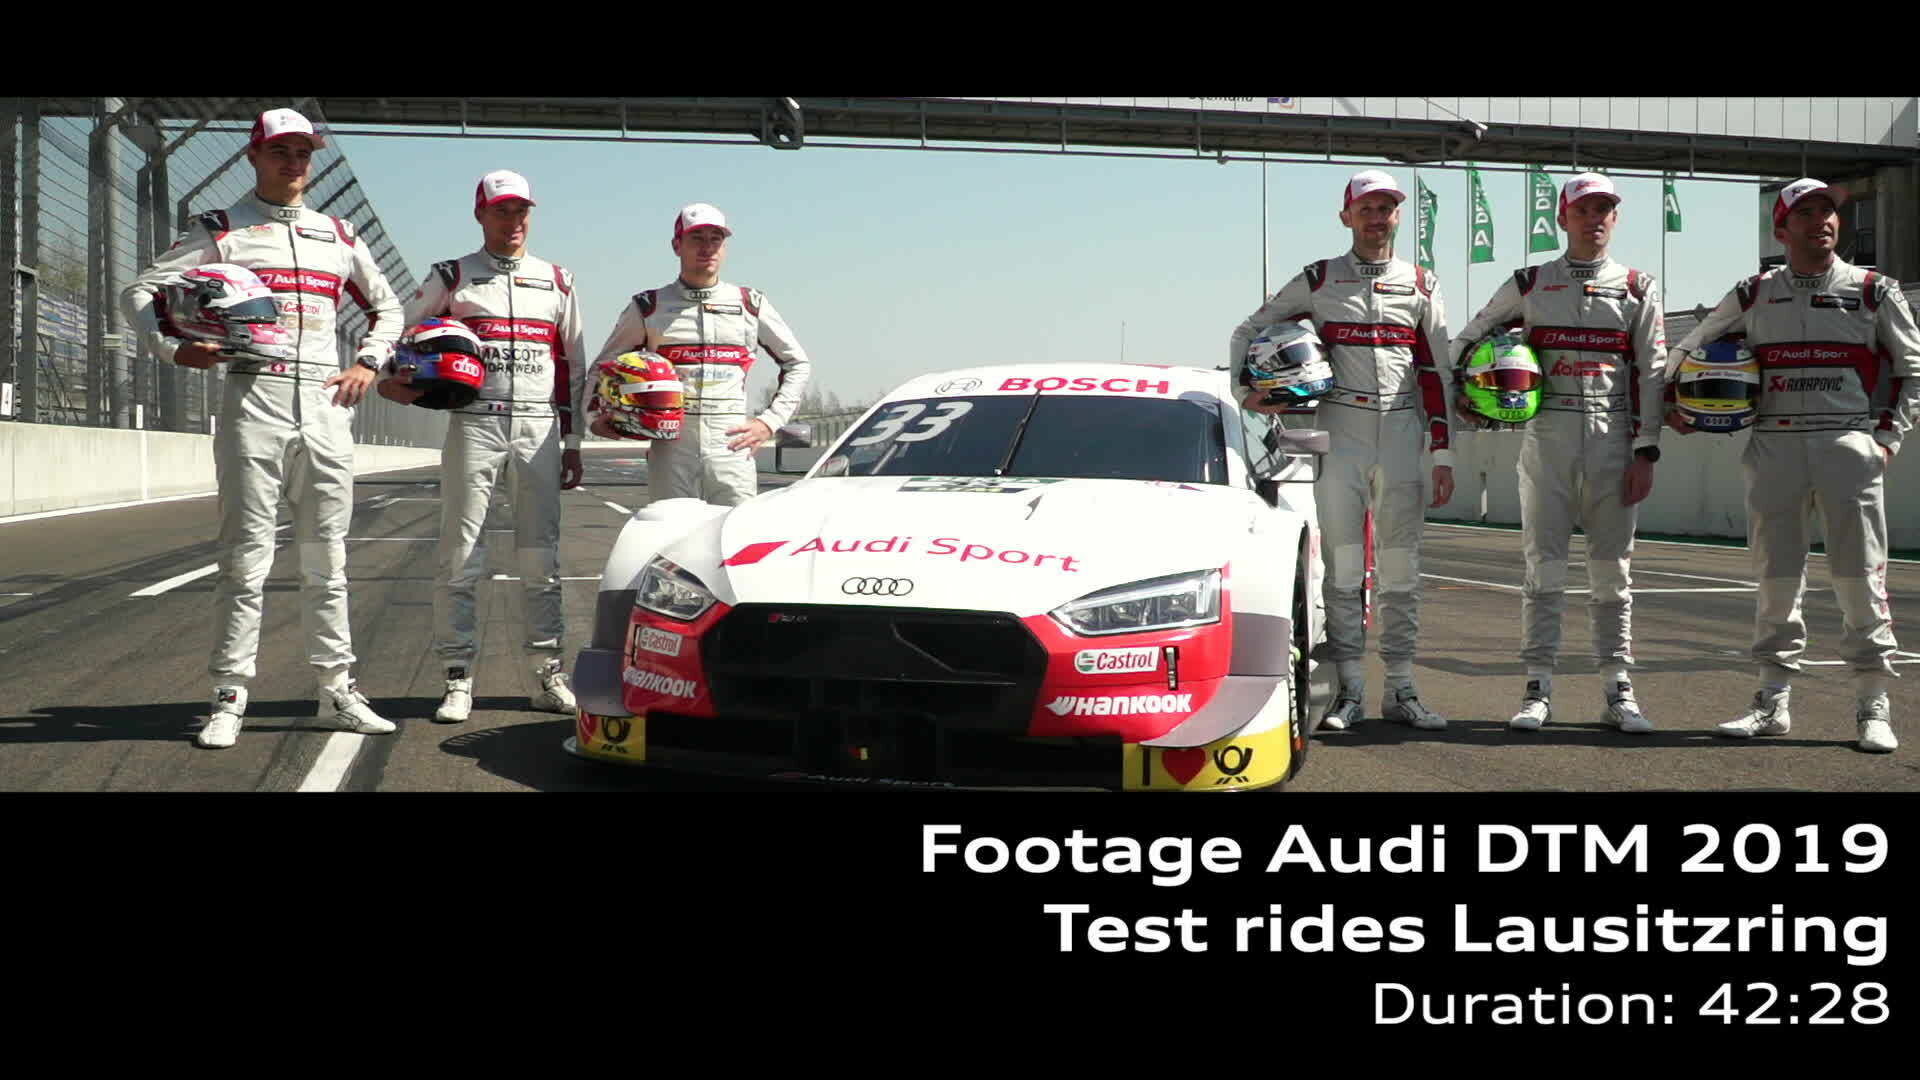 DTM test rides Lausitzring (footage)